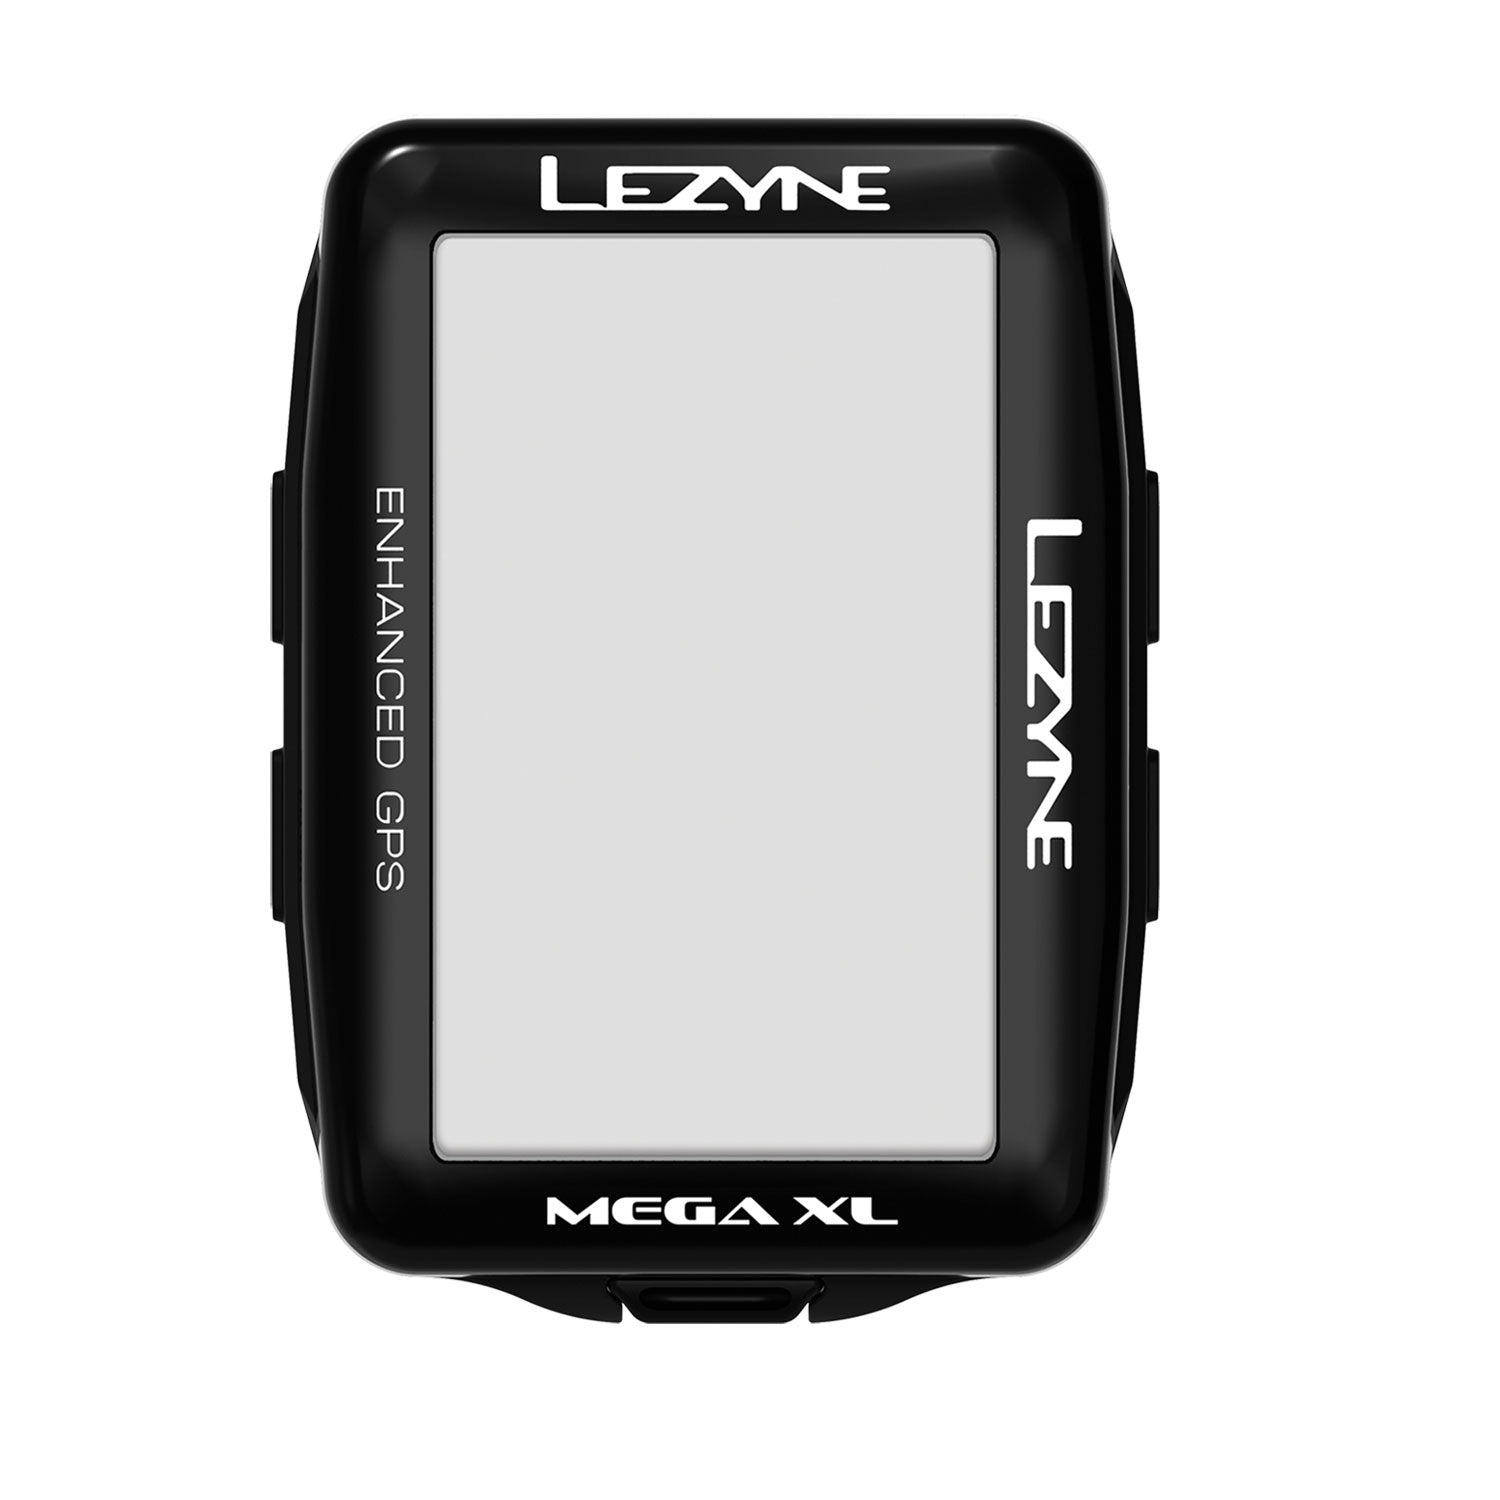 LEZYNE MEGA XL GPS BIKE COMPUTER